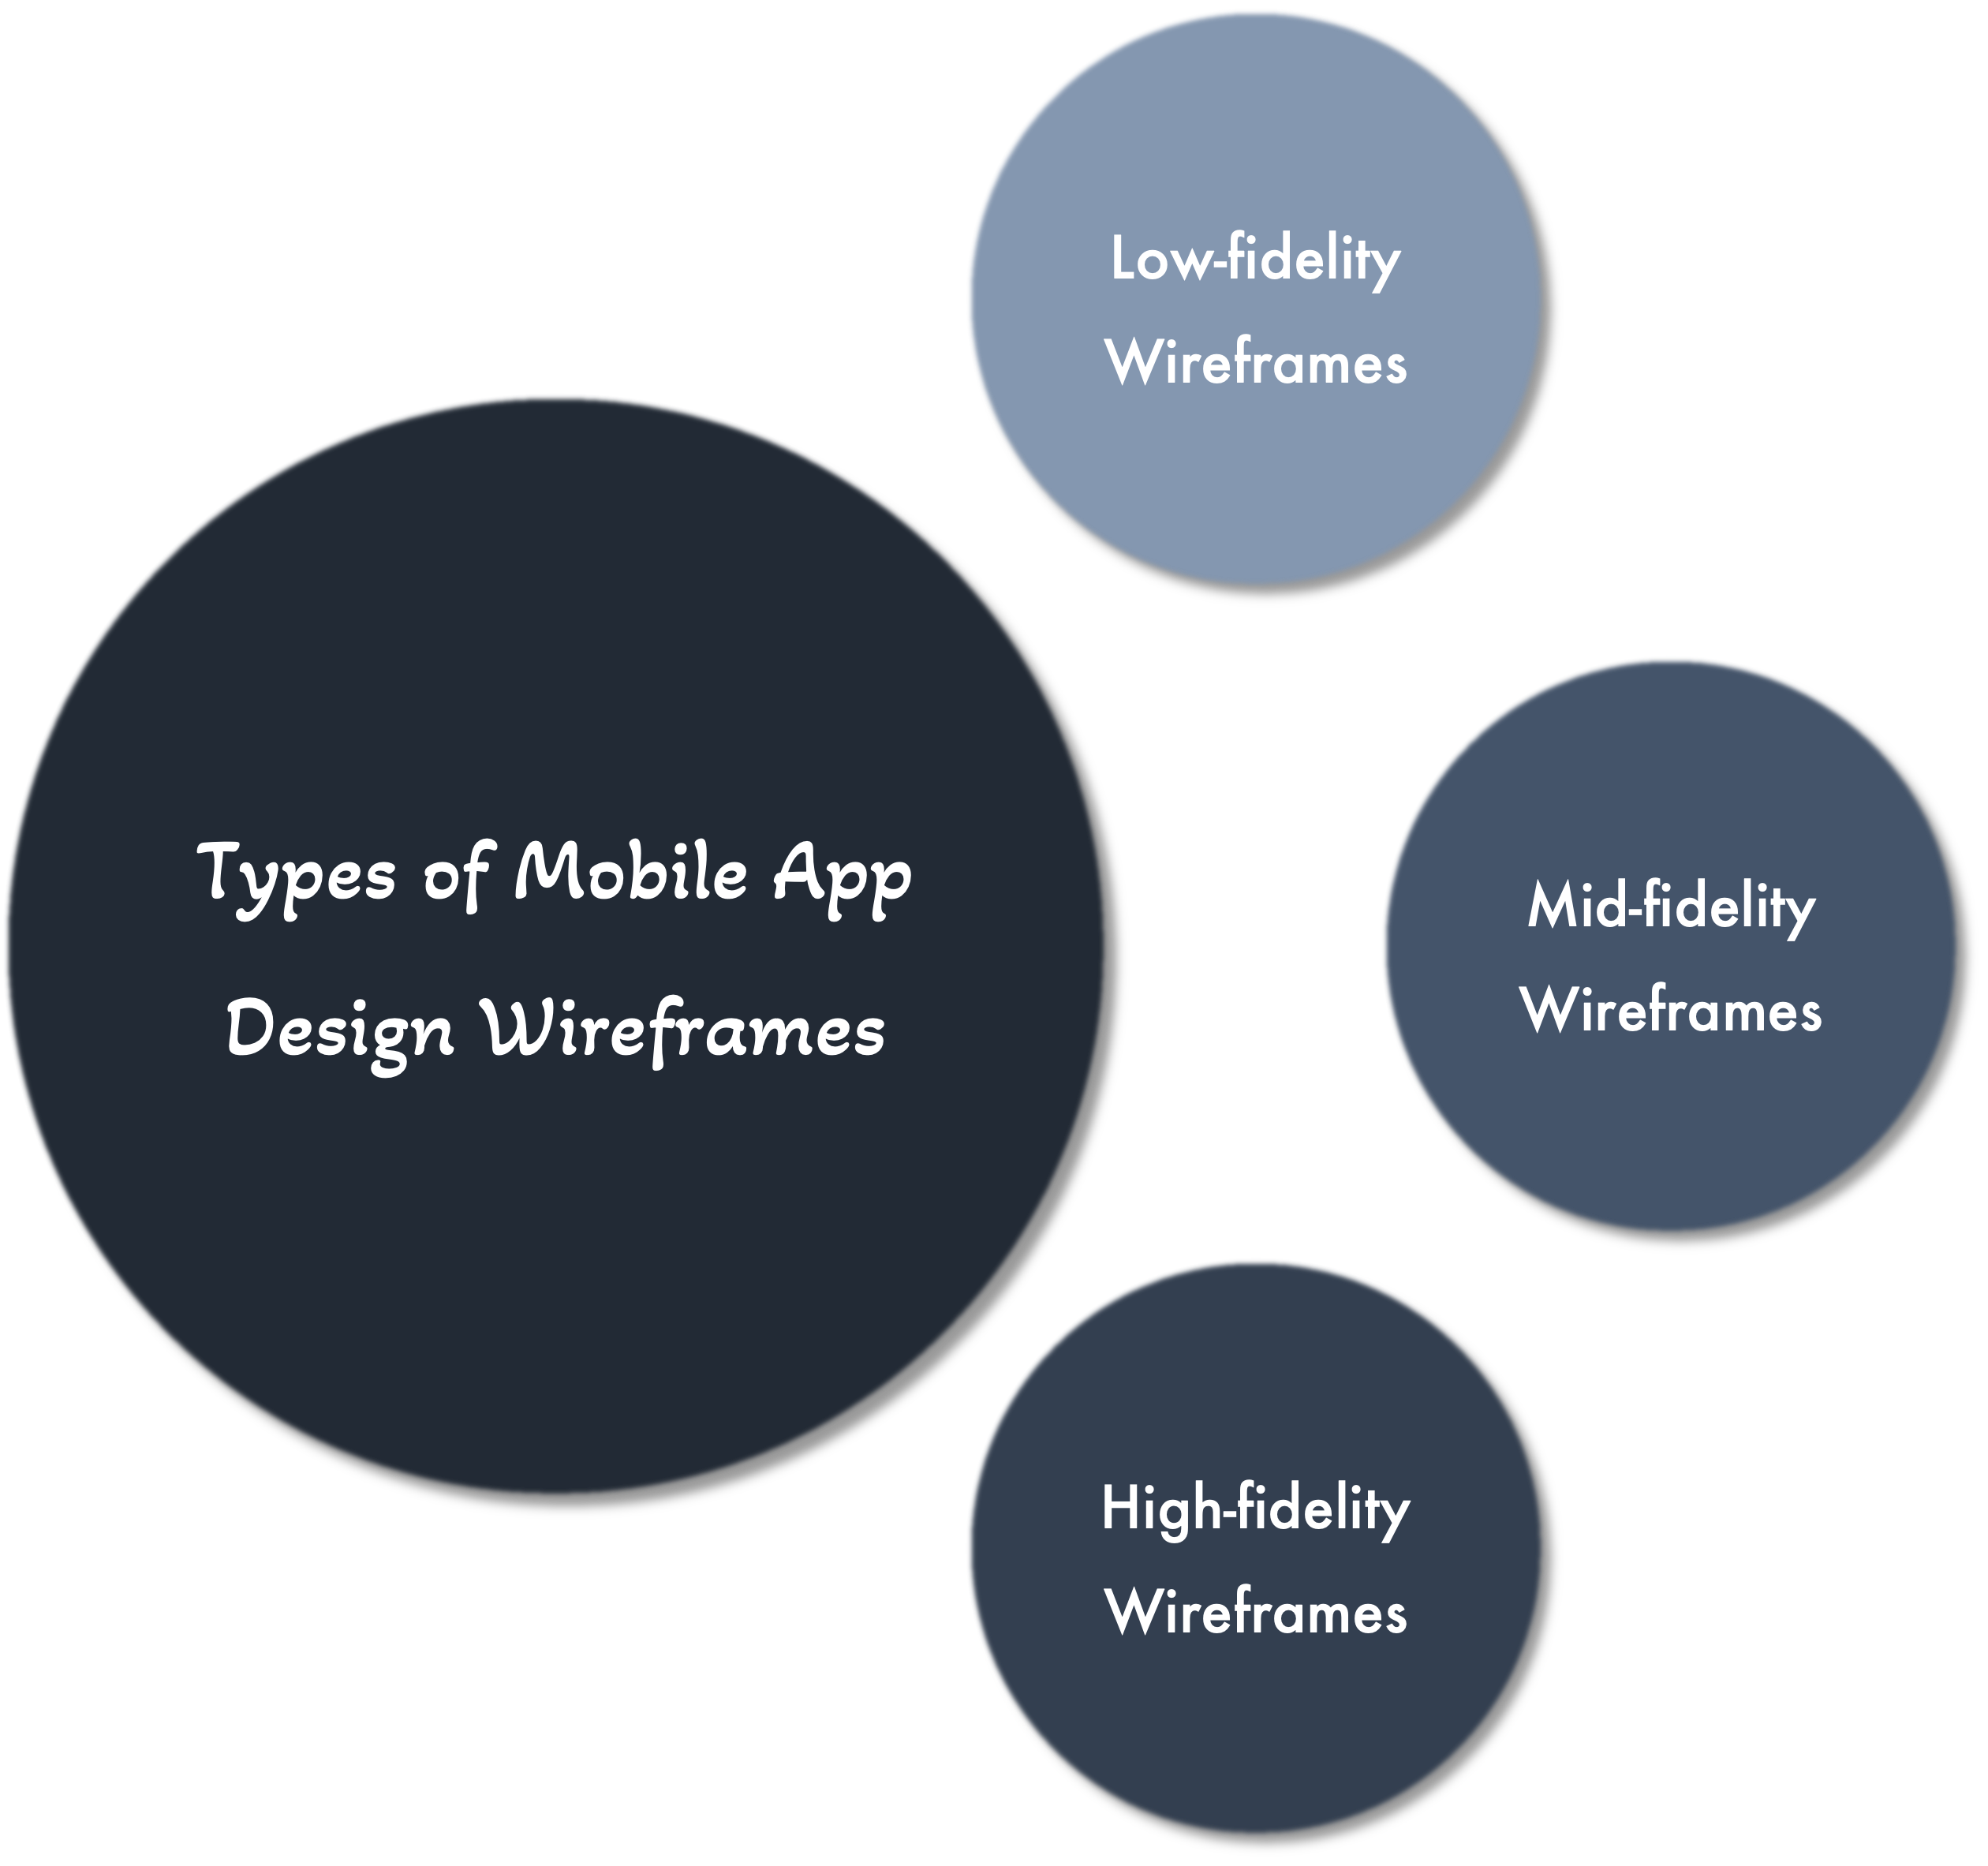 Types of Mobile App Design Wireframes